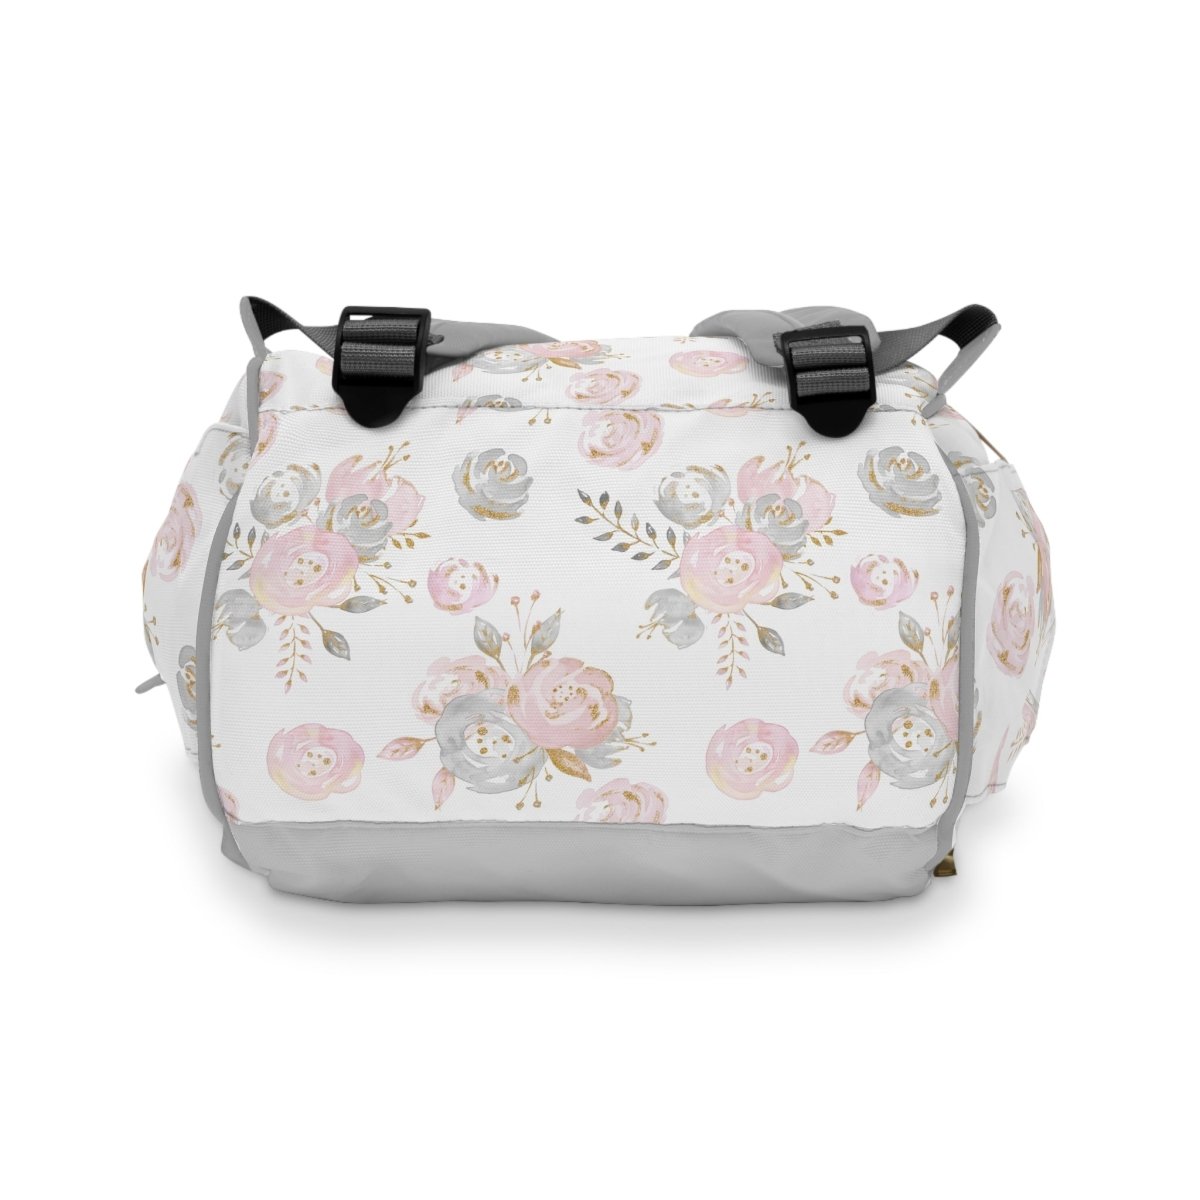 Blush Gold Floral Personalized Backpack Diaper Bag - Blush Gold Floral, gender_girl, text